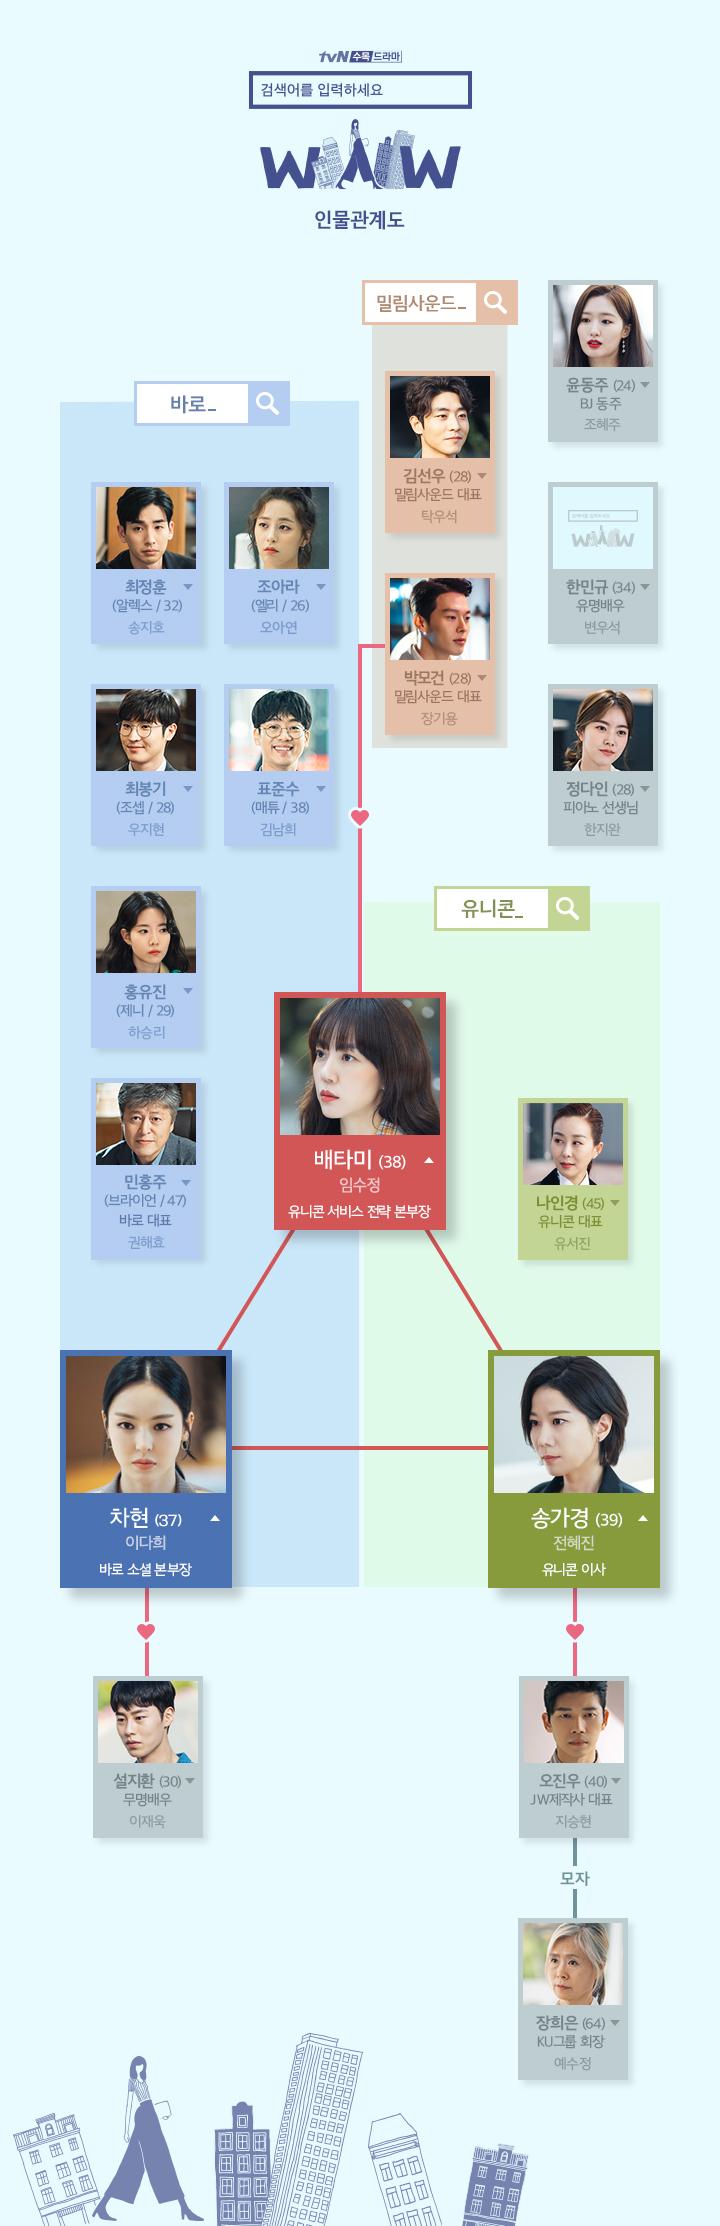 tvN드라마 '검색어를 입력하세요 WWW' 인물관계도(출처: 공식홈페이지)